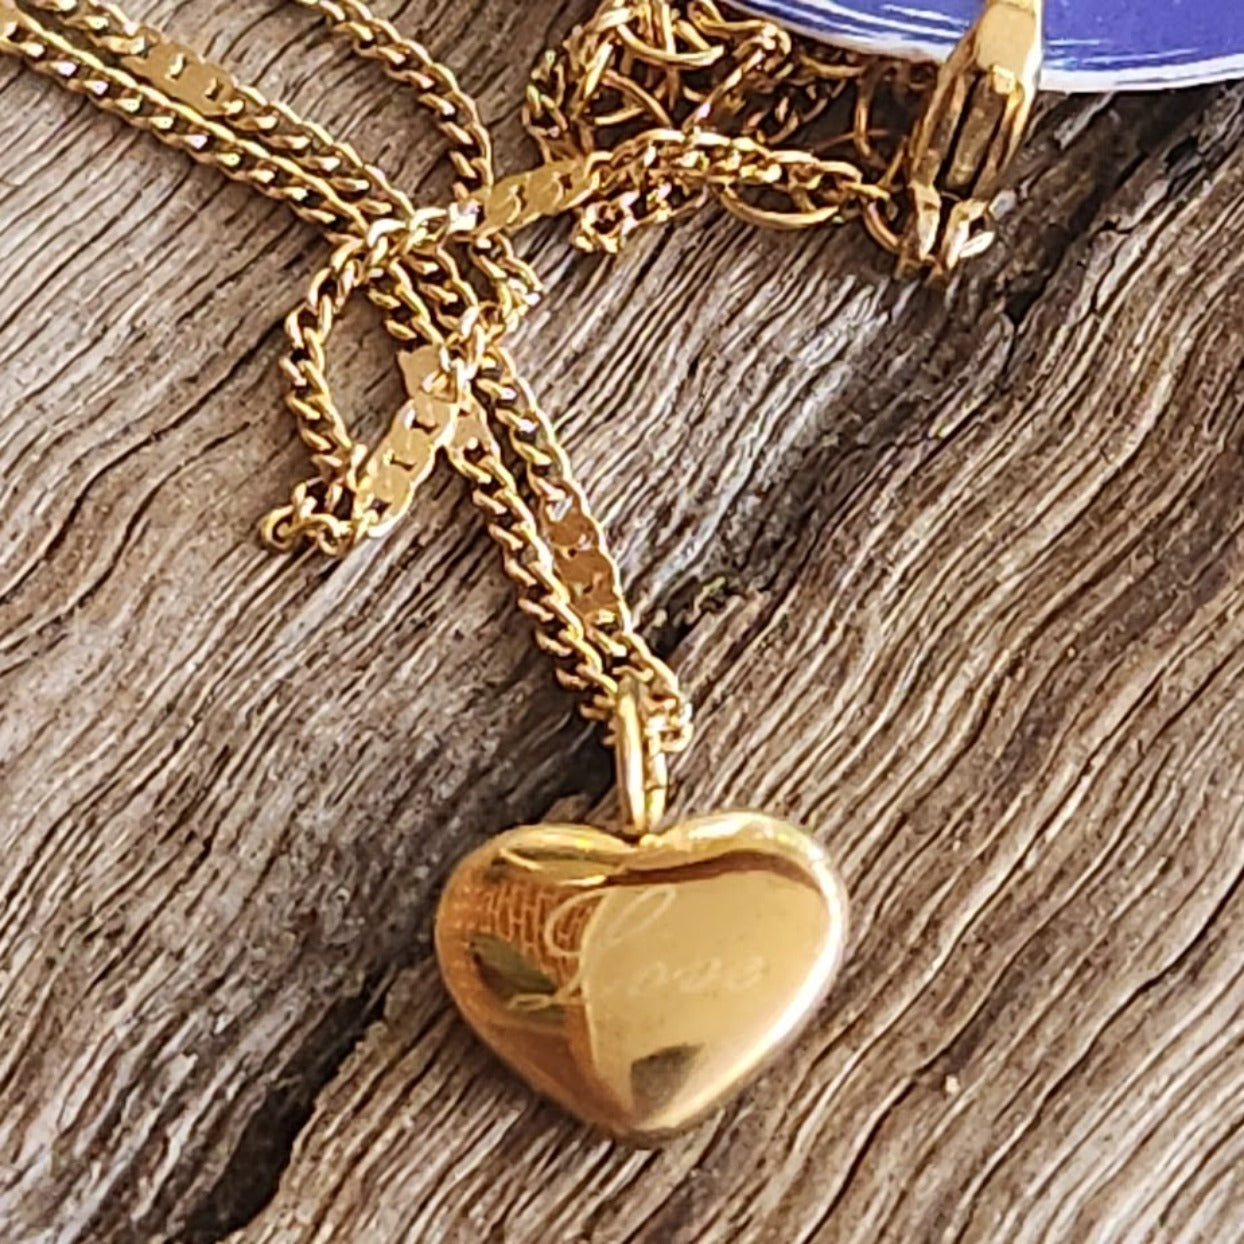 GOLD HEART 'LOVE' WATERPROOF NECKLACE - Premium Necklace from www.beachboho.com.au - Just $65! Shop now at www.beachboho.com.au